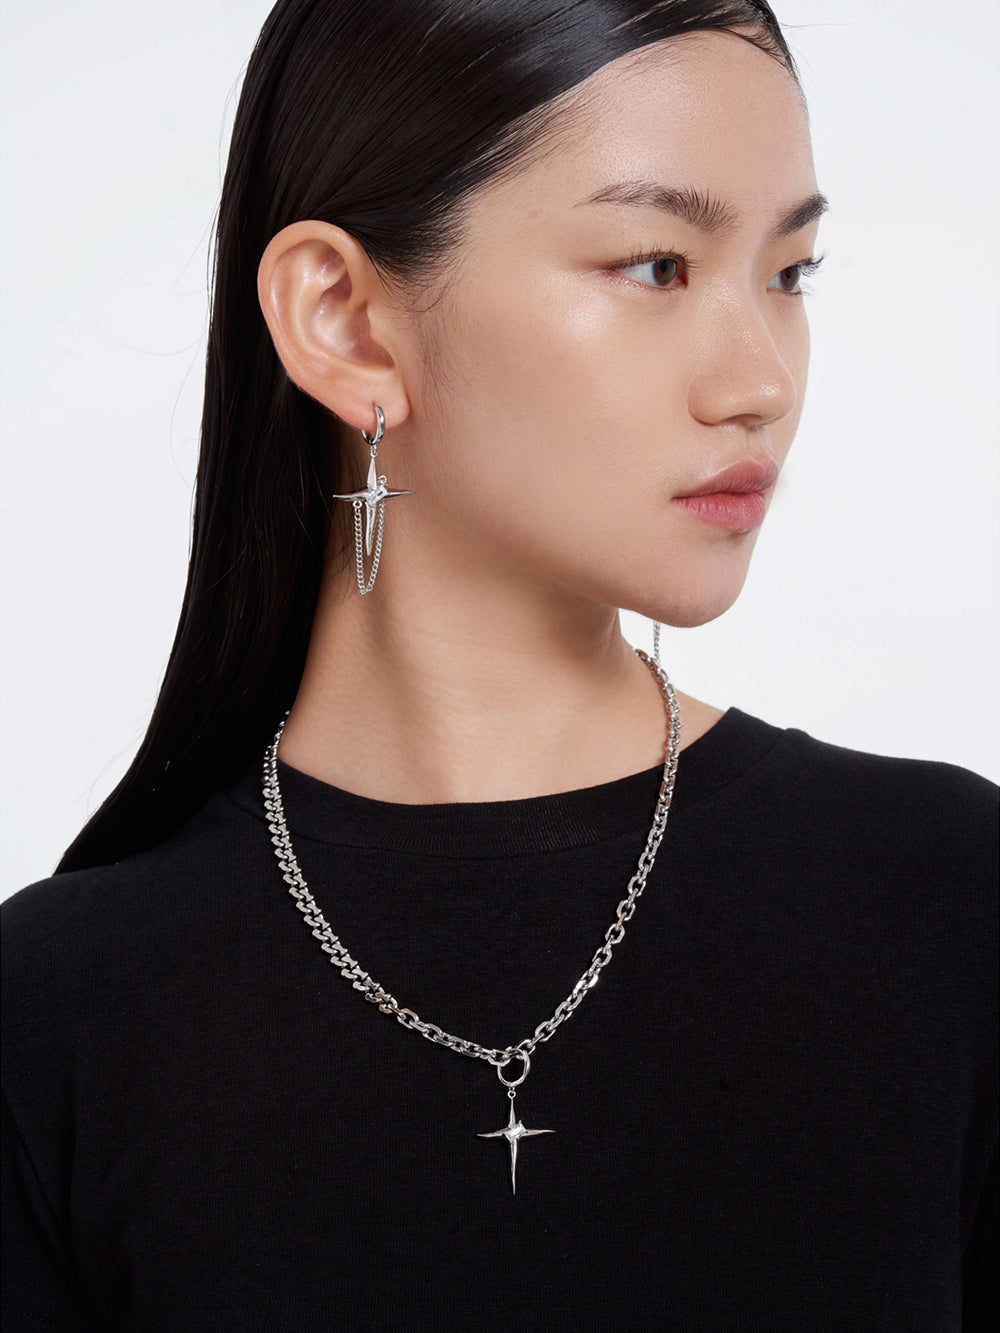 MUKTANK×SUN HUNTER Black Diamond-studded Four-pointed Star Chain Earrings